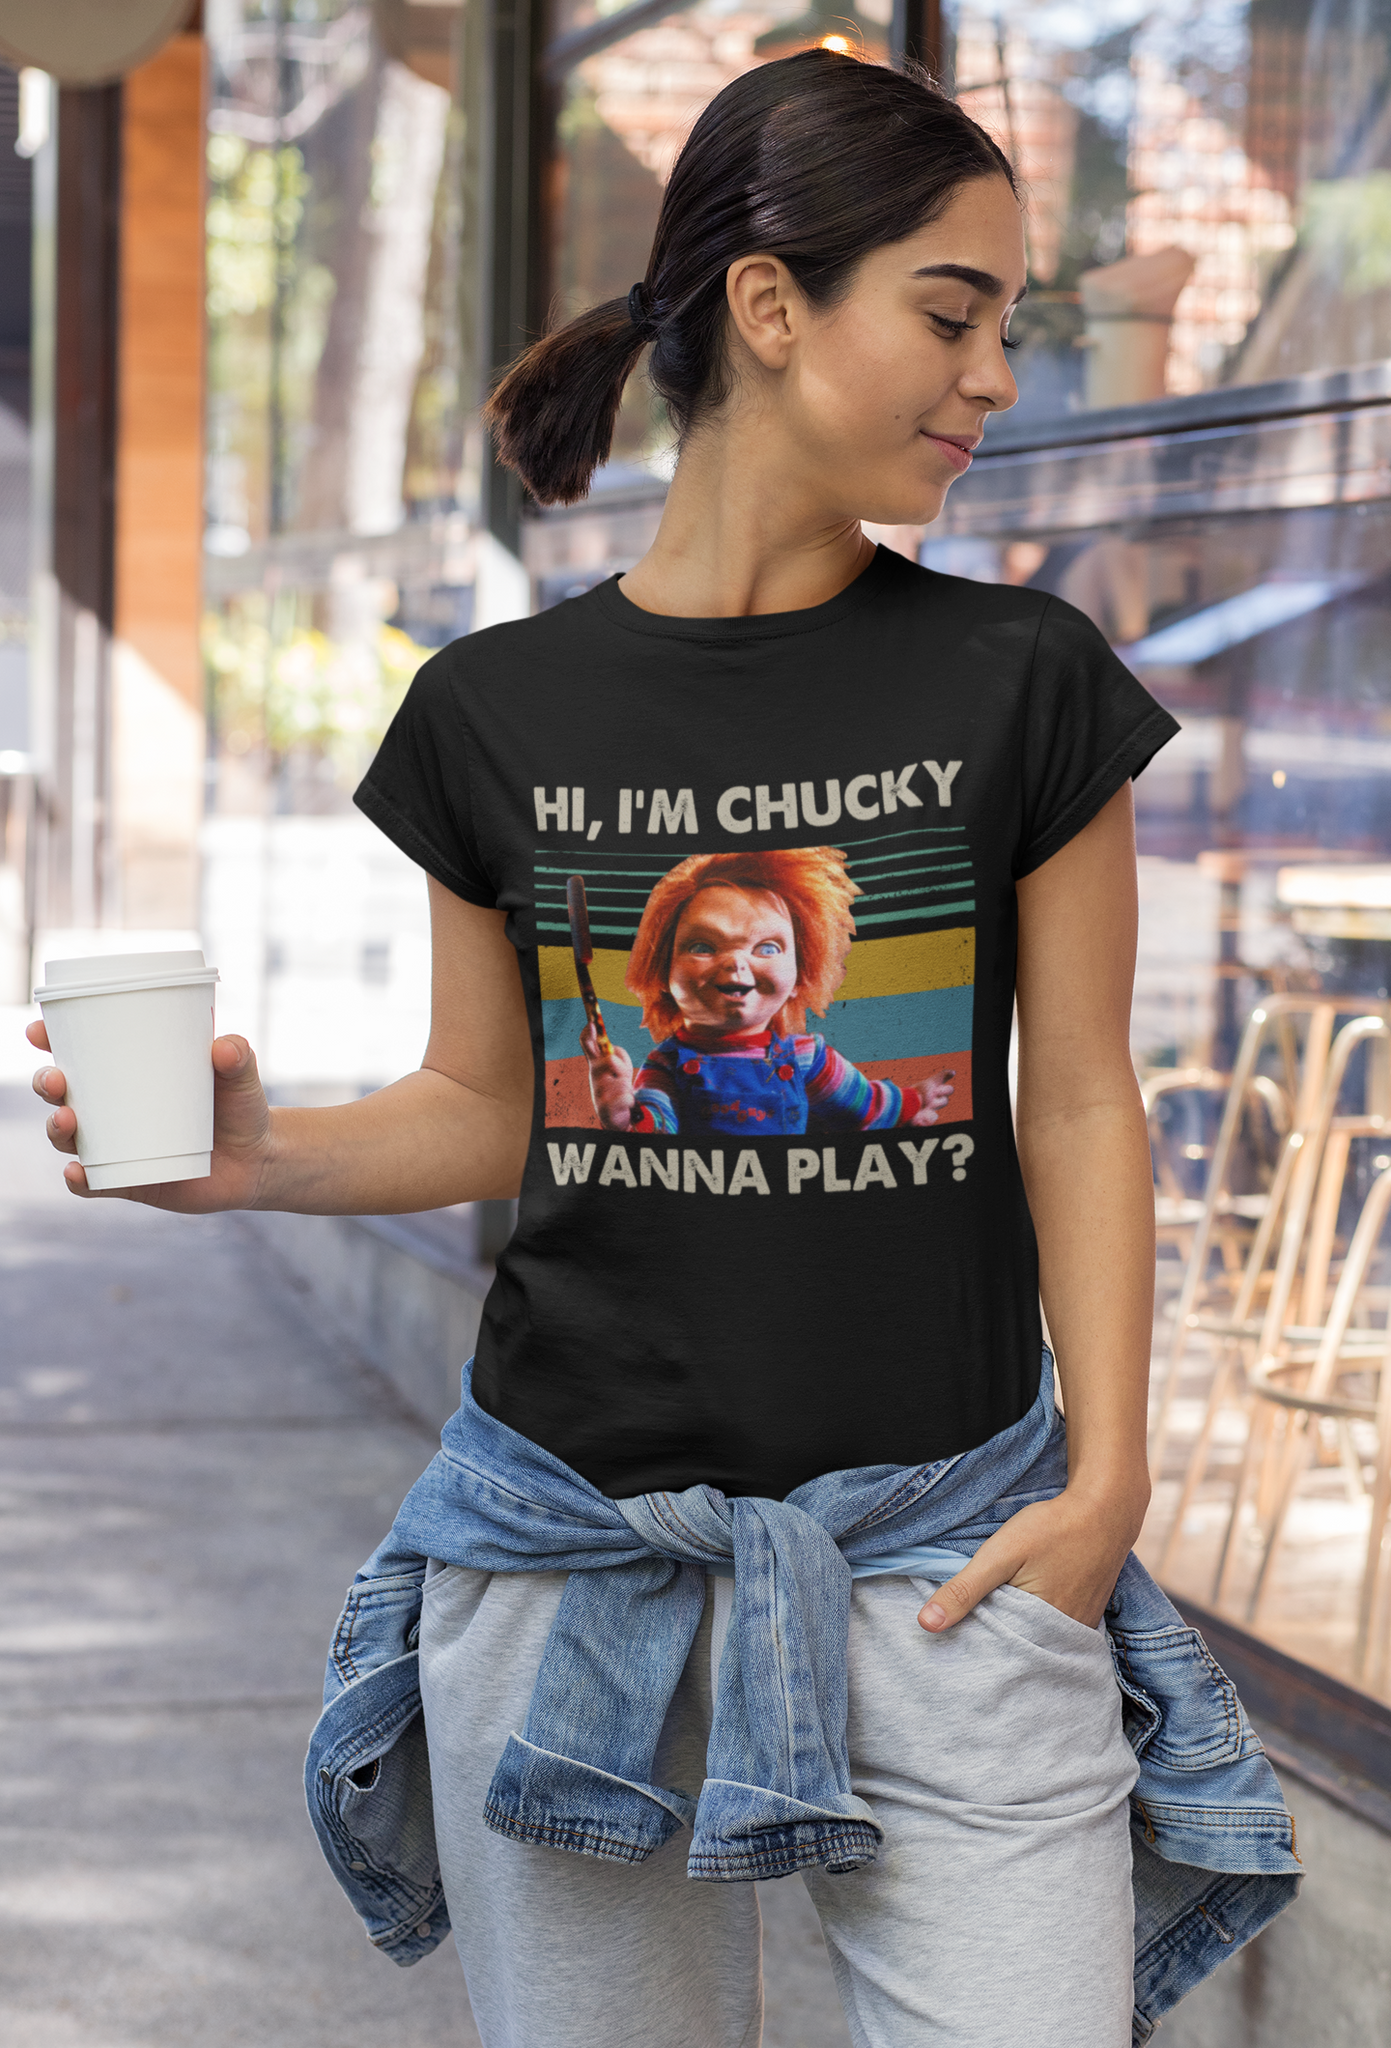 Chucky Vintage T Shirt, Horror Character Shirt, Hi Im Chucky Wanna Play T Shirt, Halloween Gifts